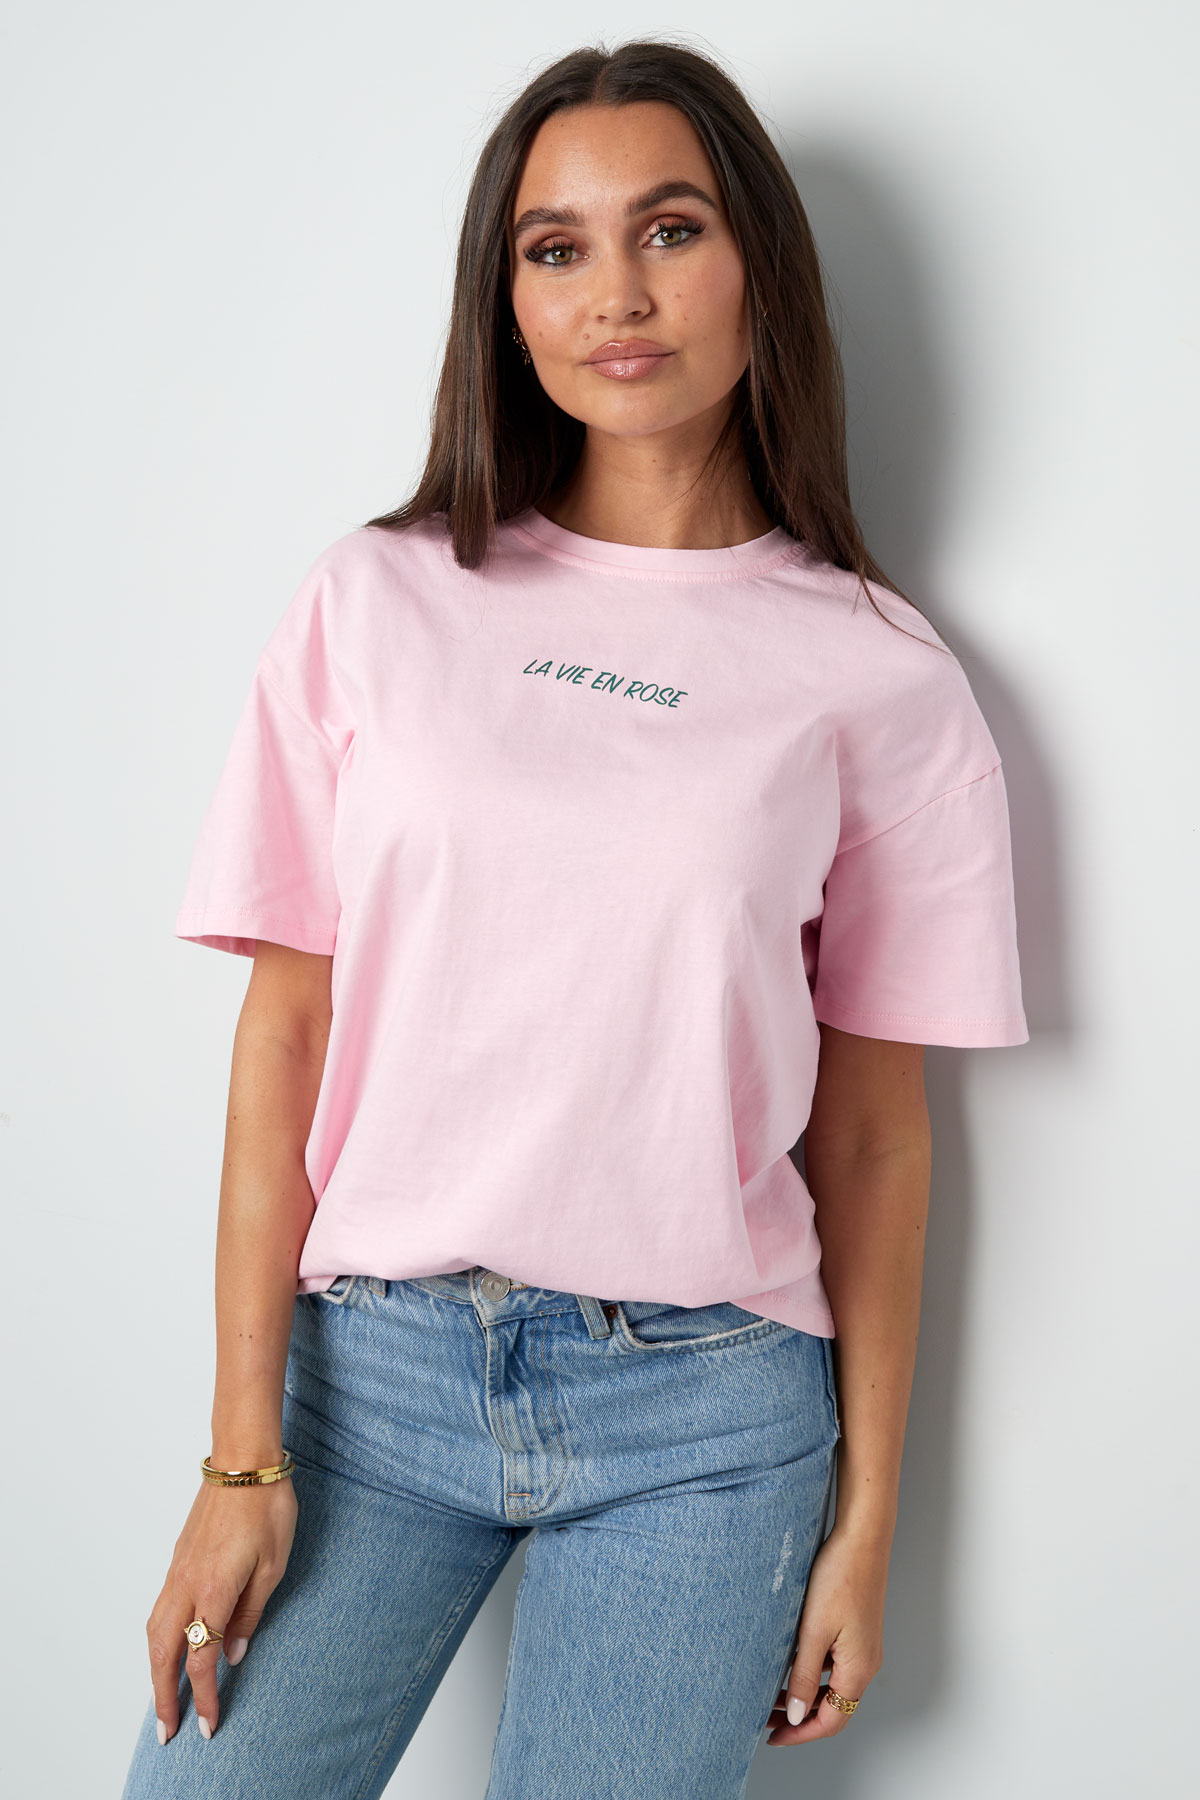 T-shirt la vie en rose - rosa Immagine5